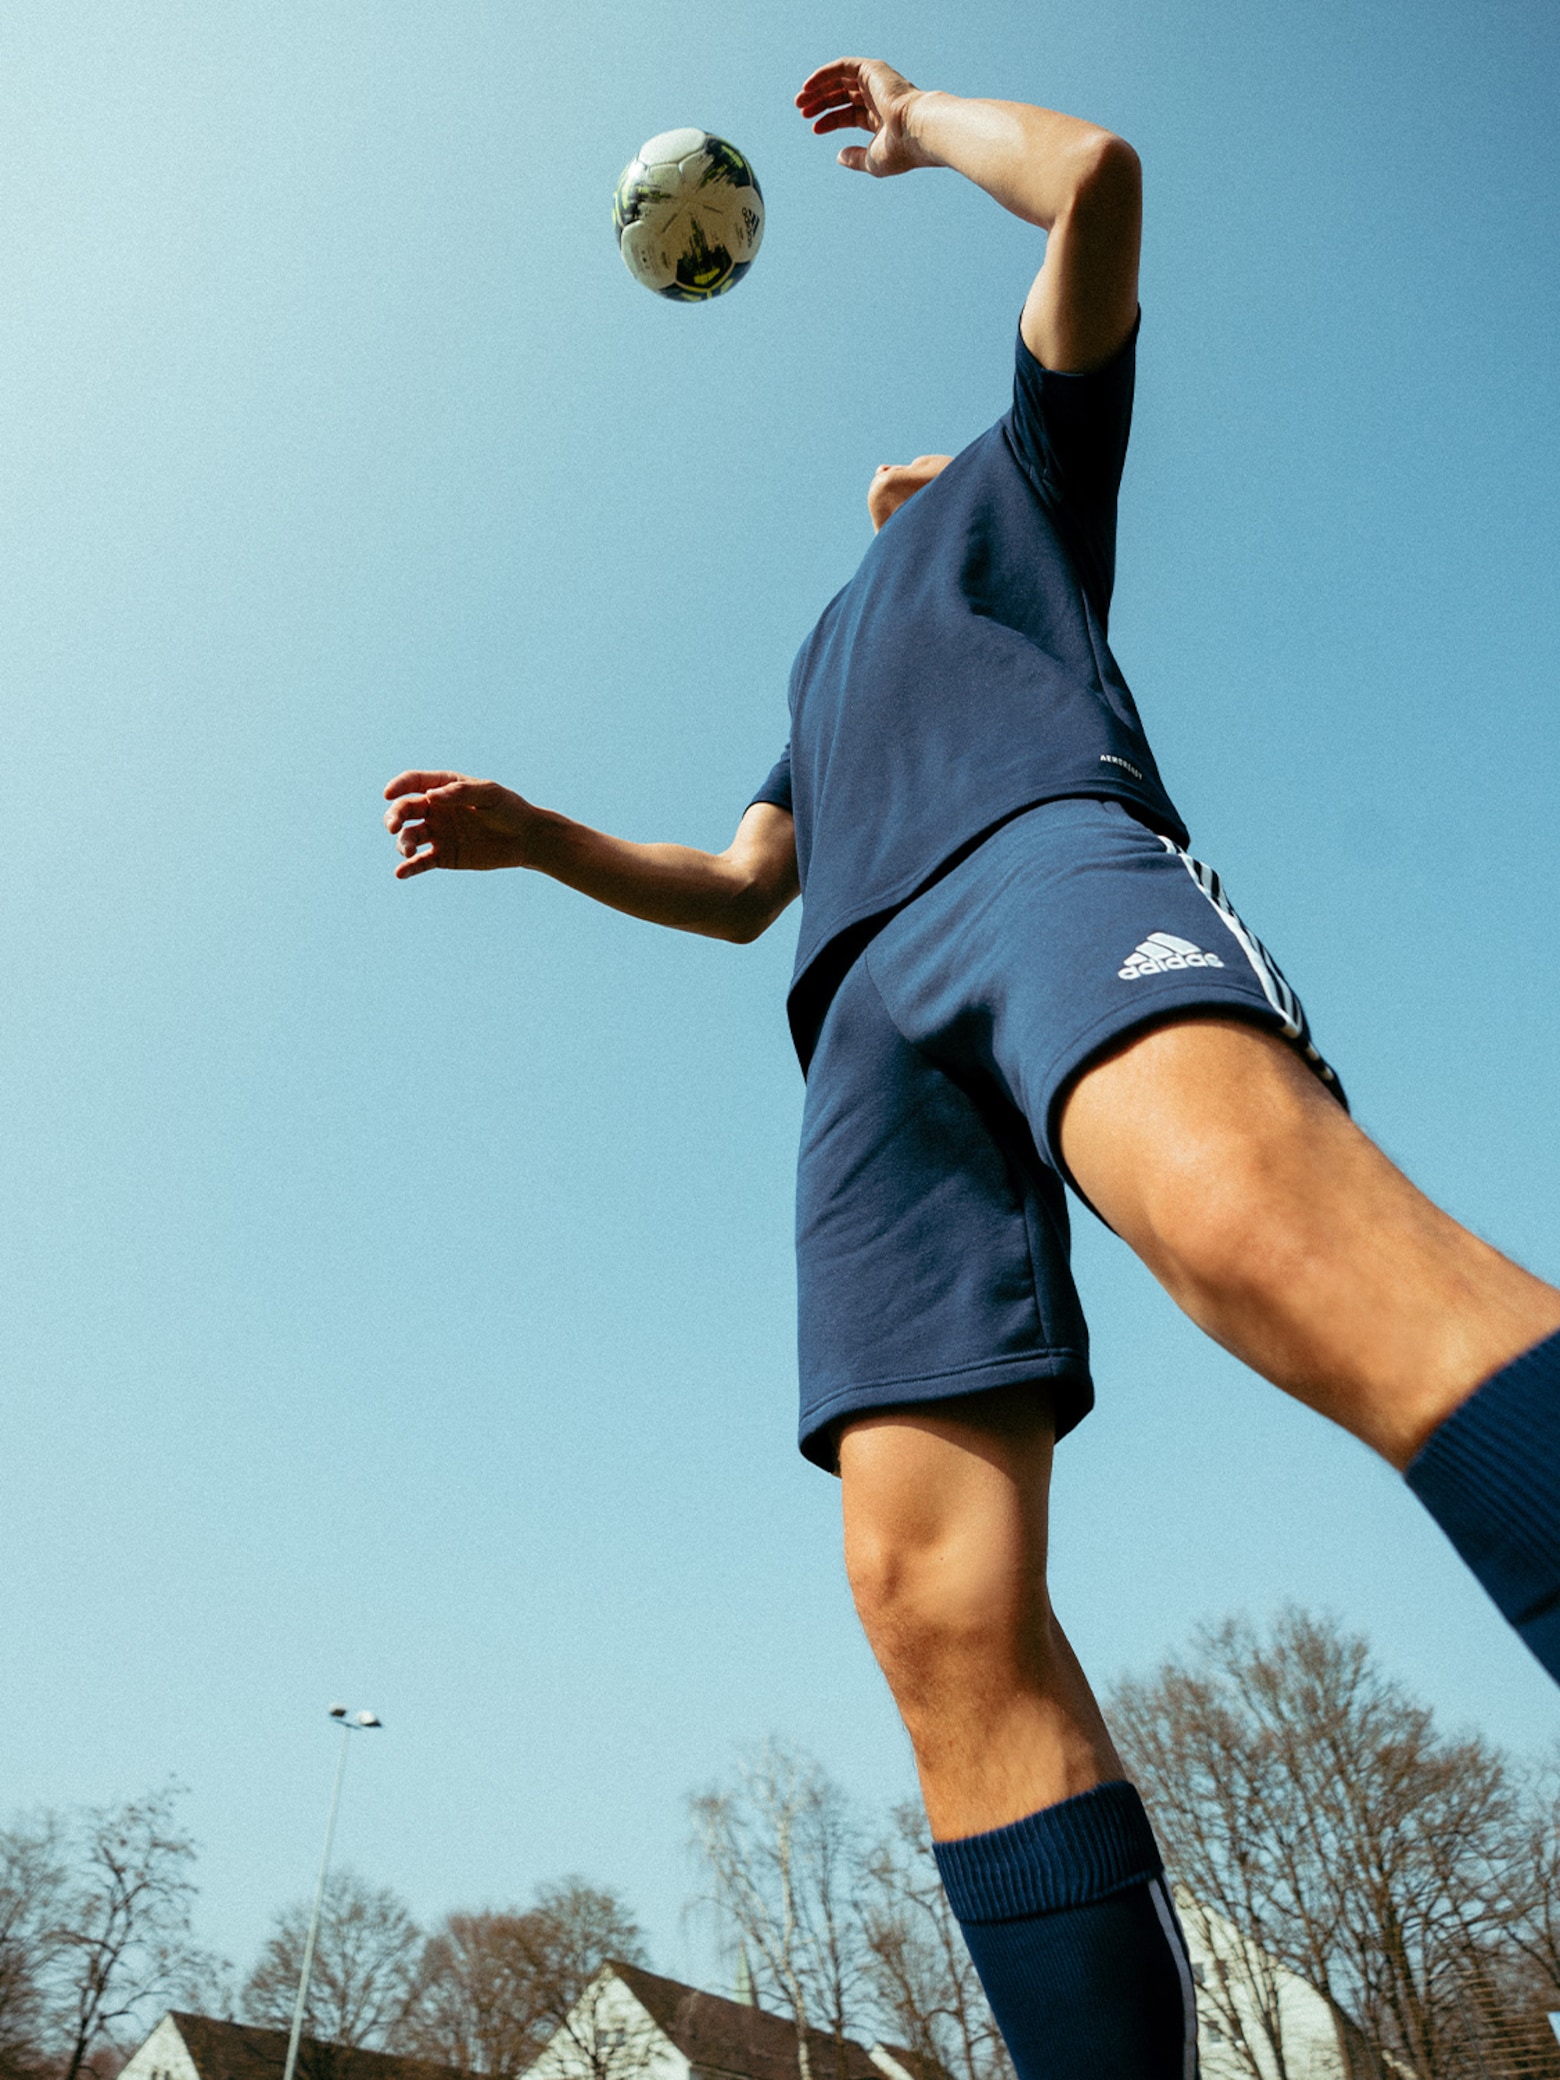 Goalkeeper or Striker? Essentials for soccer players